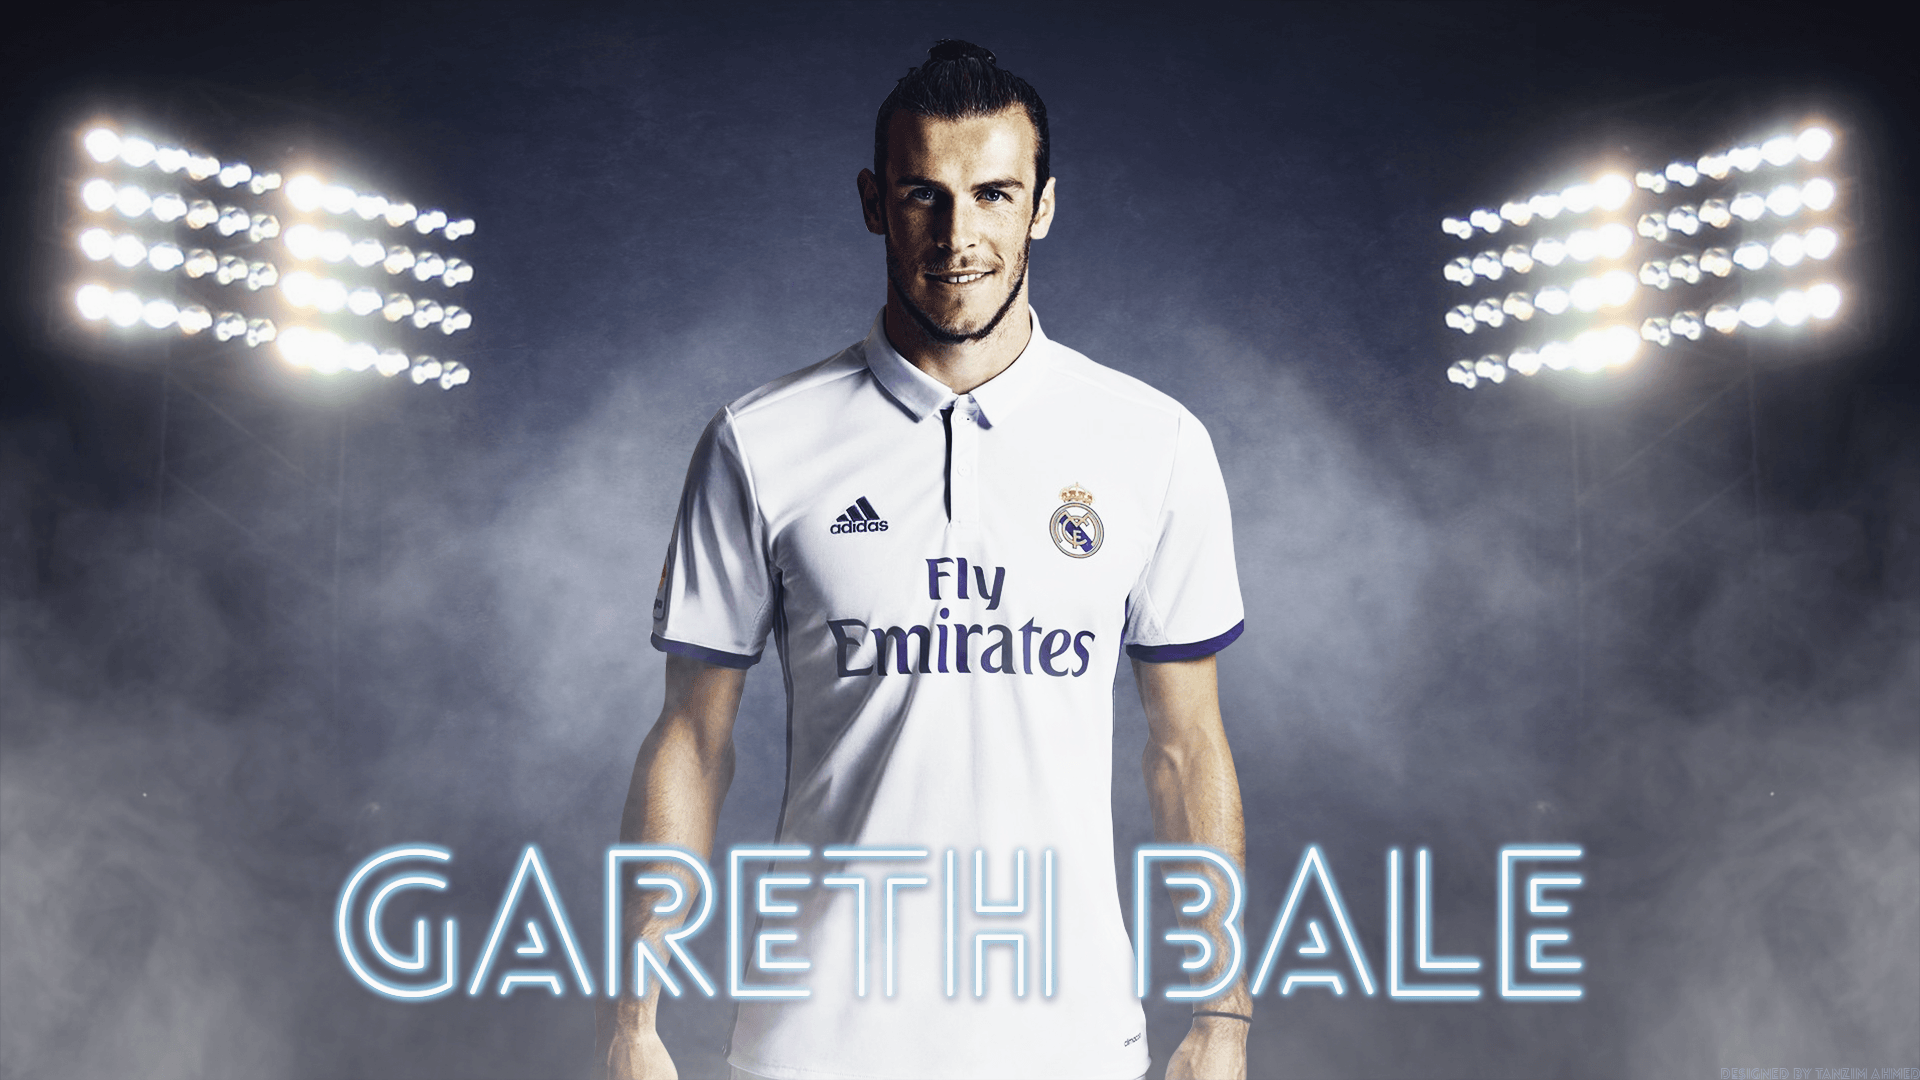 Gareth Bale Wallpaper 2018